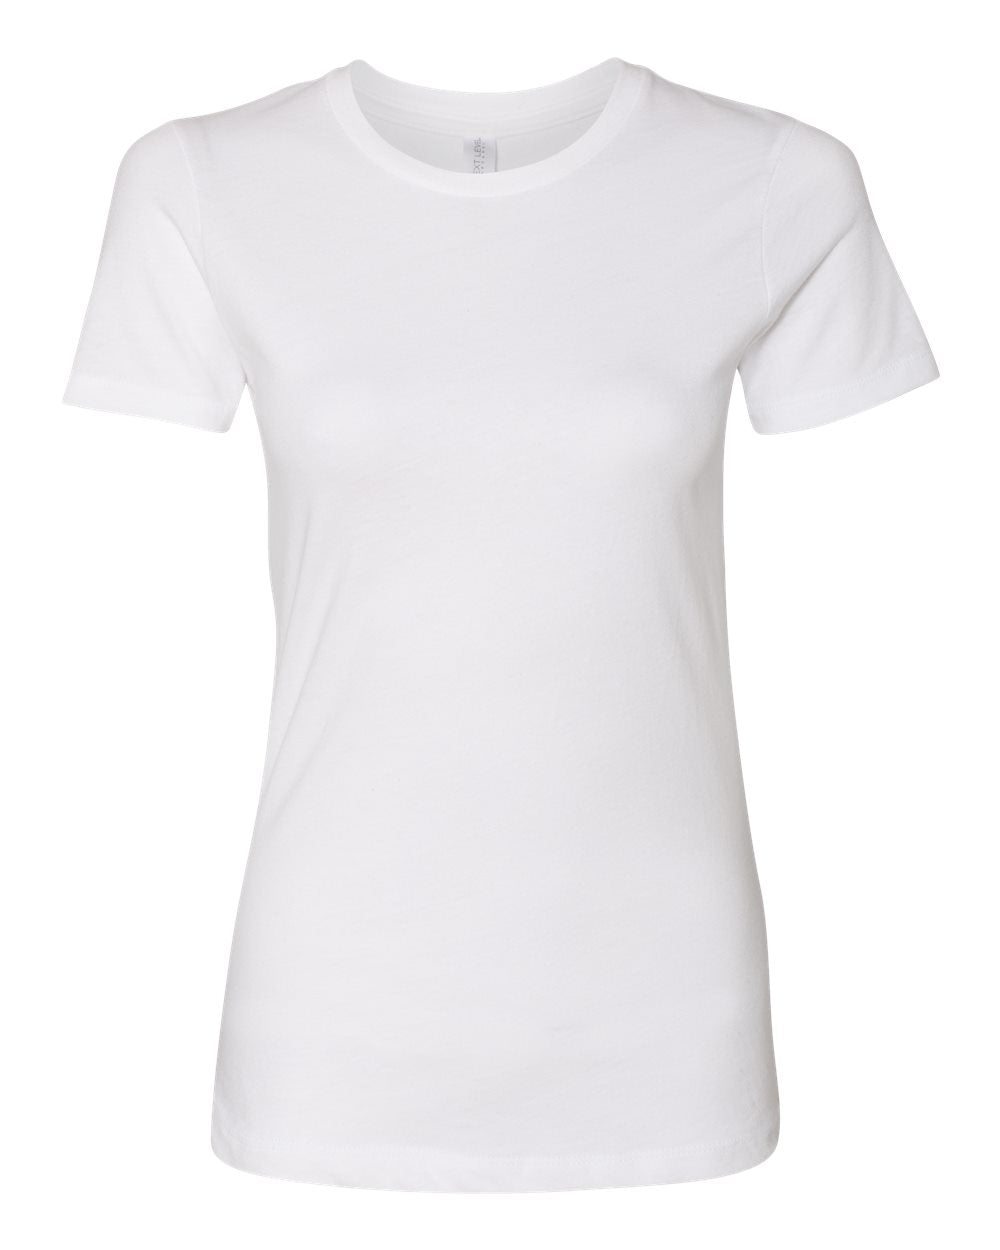 Next Level - Women’s Cotton T-Shirt - 3900